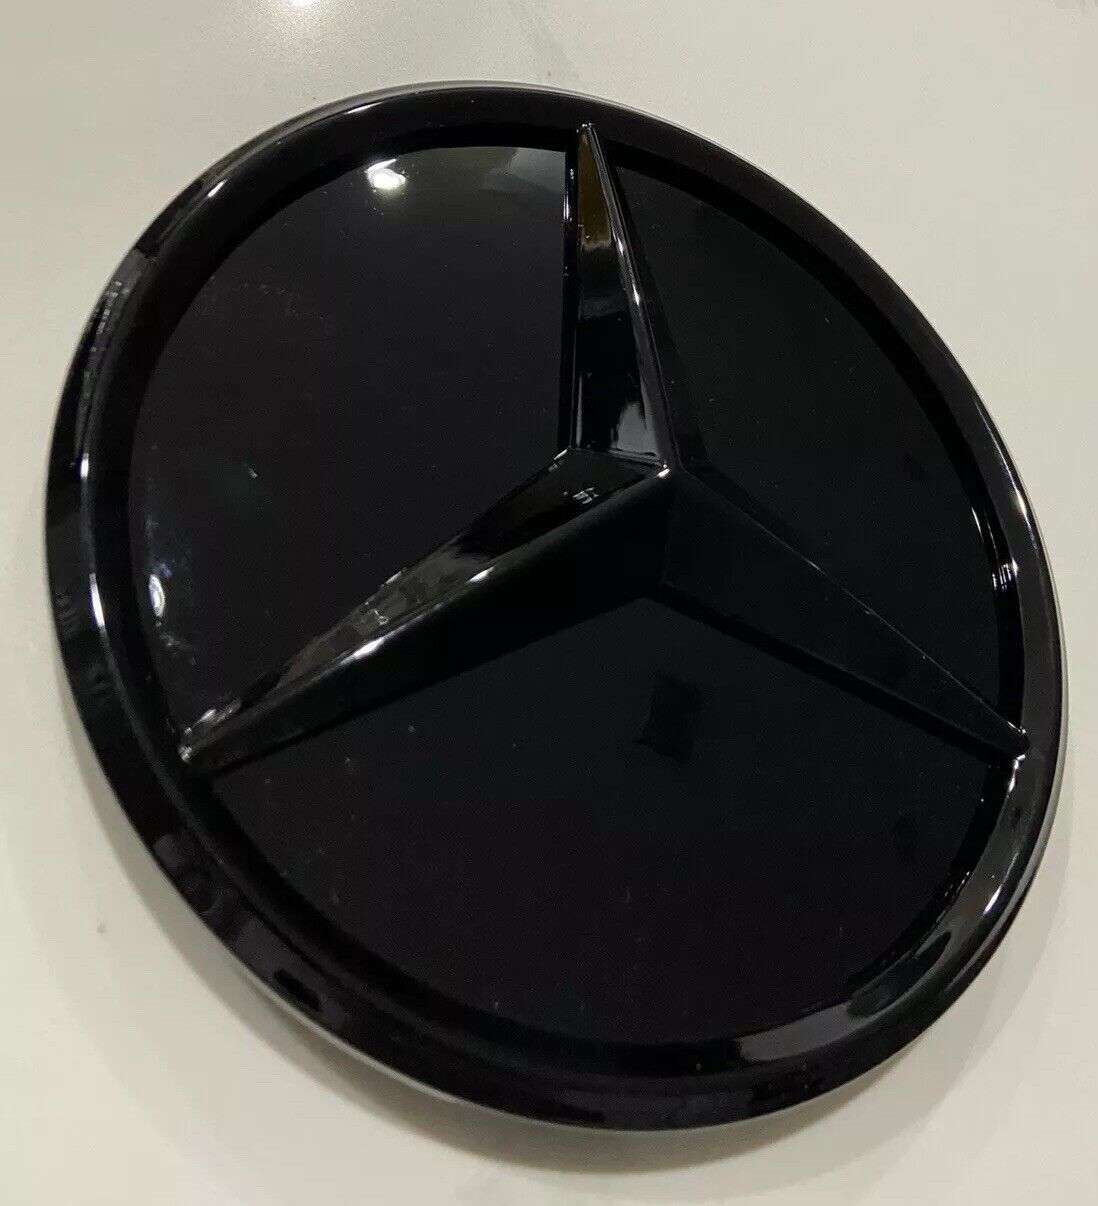 Mercedes Benz A-Class Gloss Black Front Grille Star Badge Emblems New